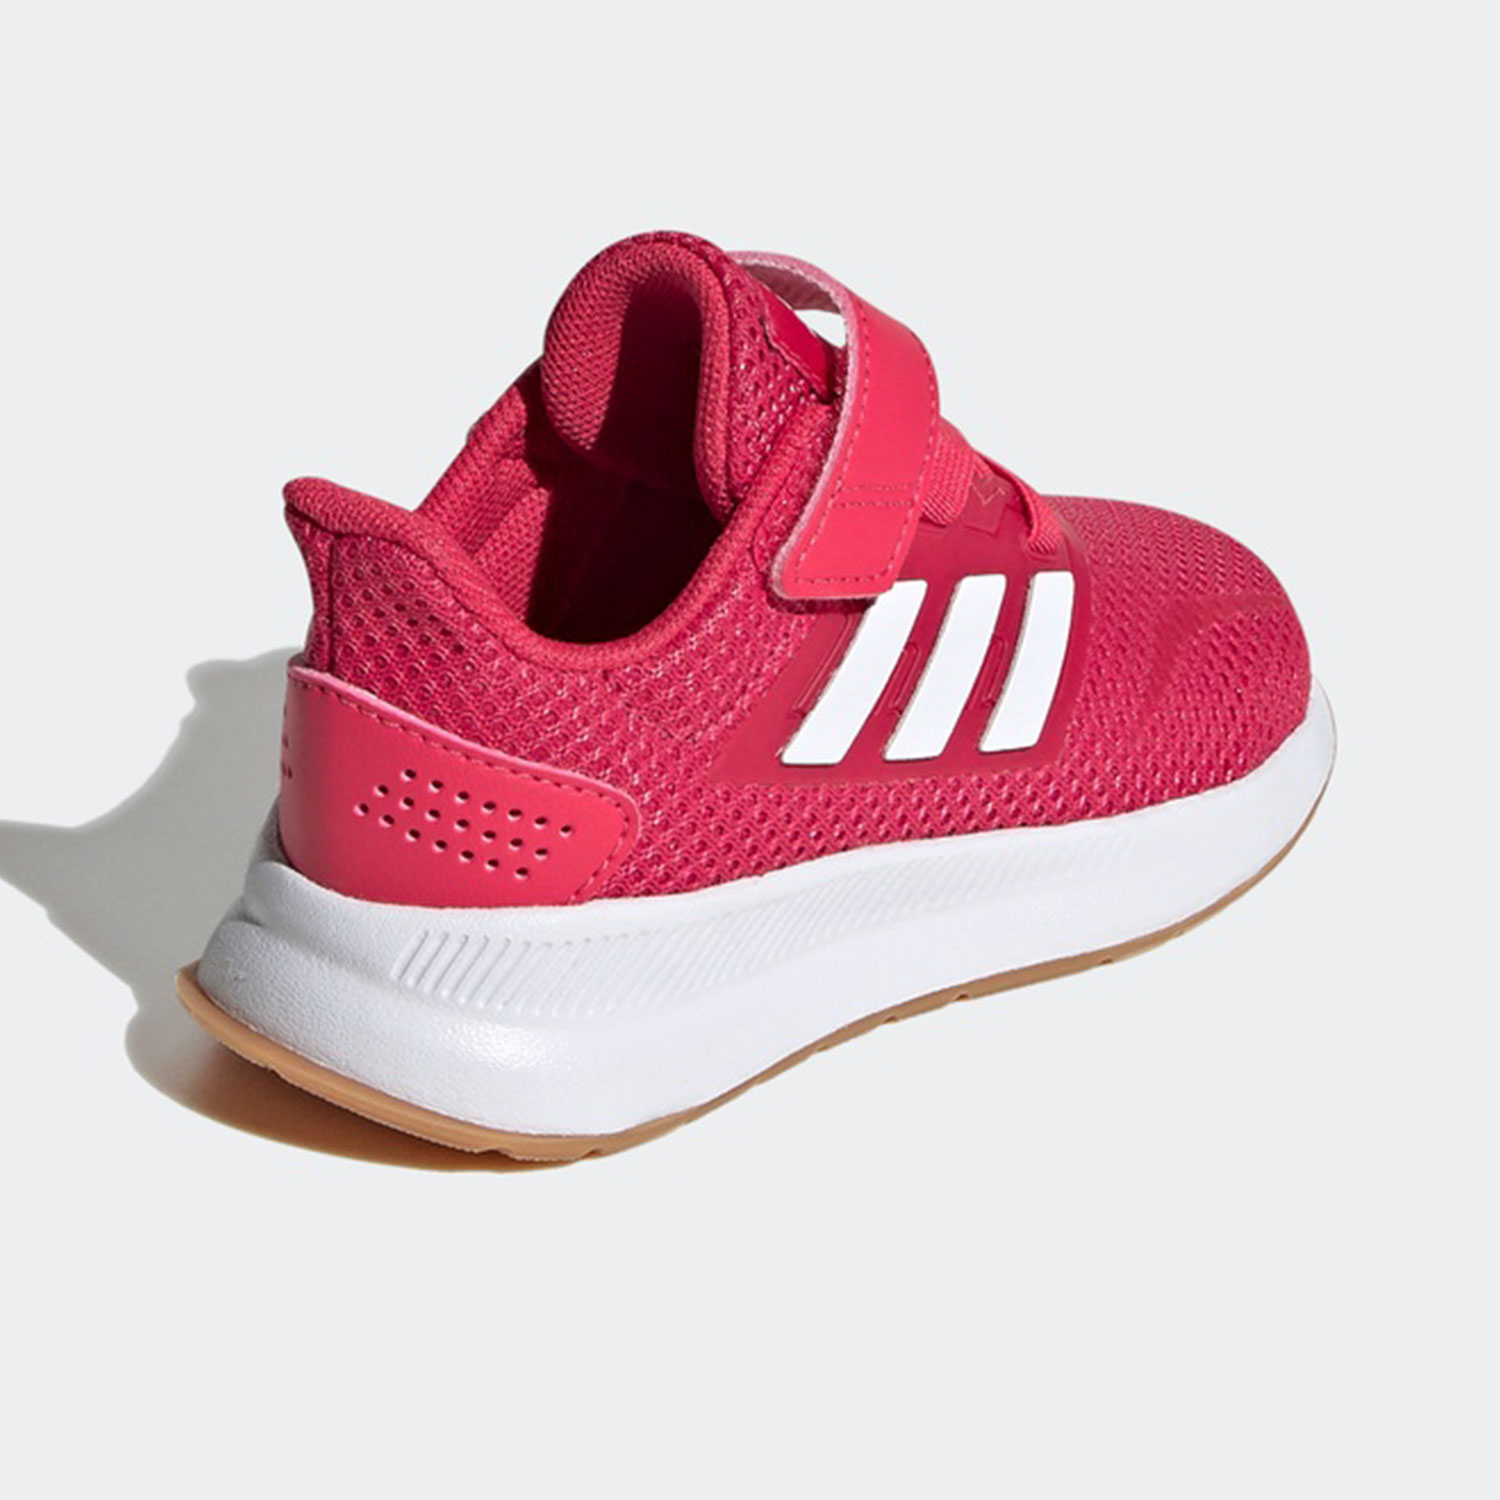 Adidas/阿迪达斯正品RUNFALCON I婴童轻便透气跑步运动鞋 FW5156 - 图1